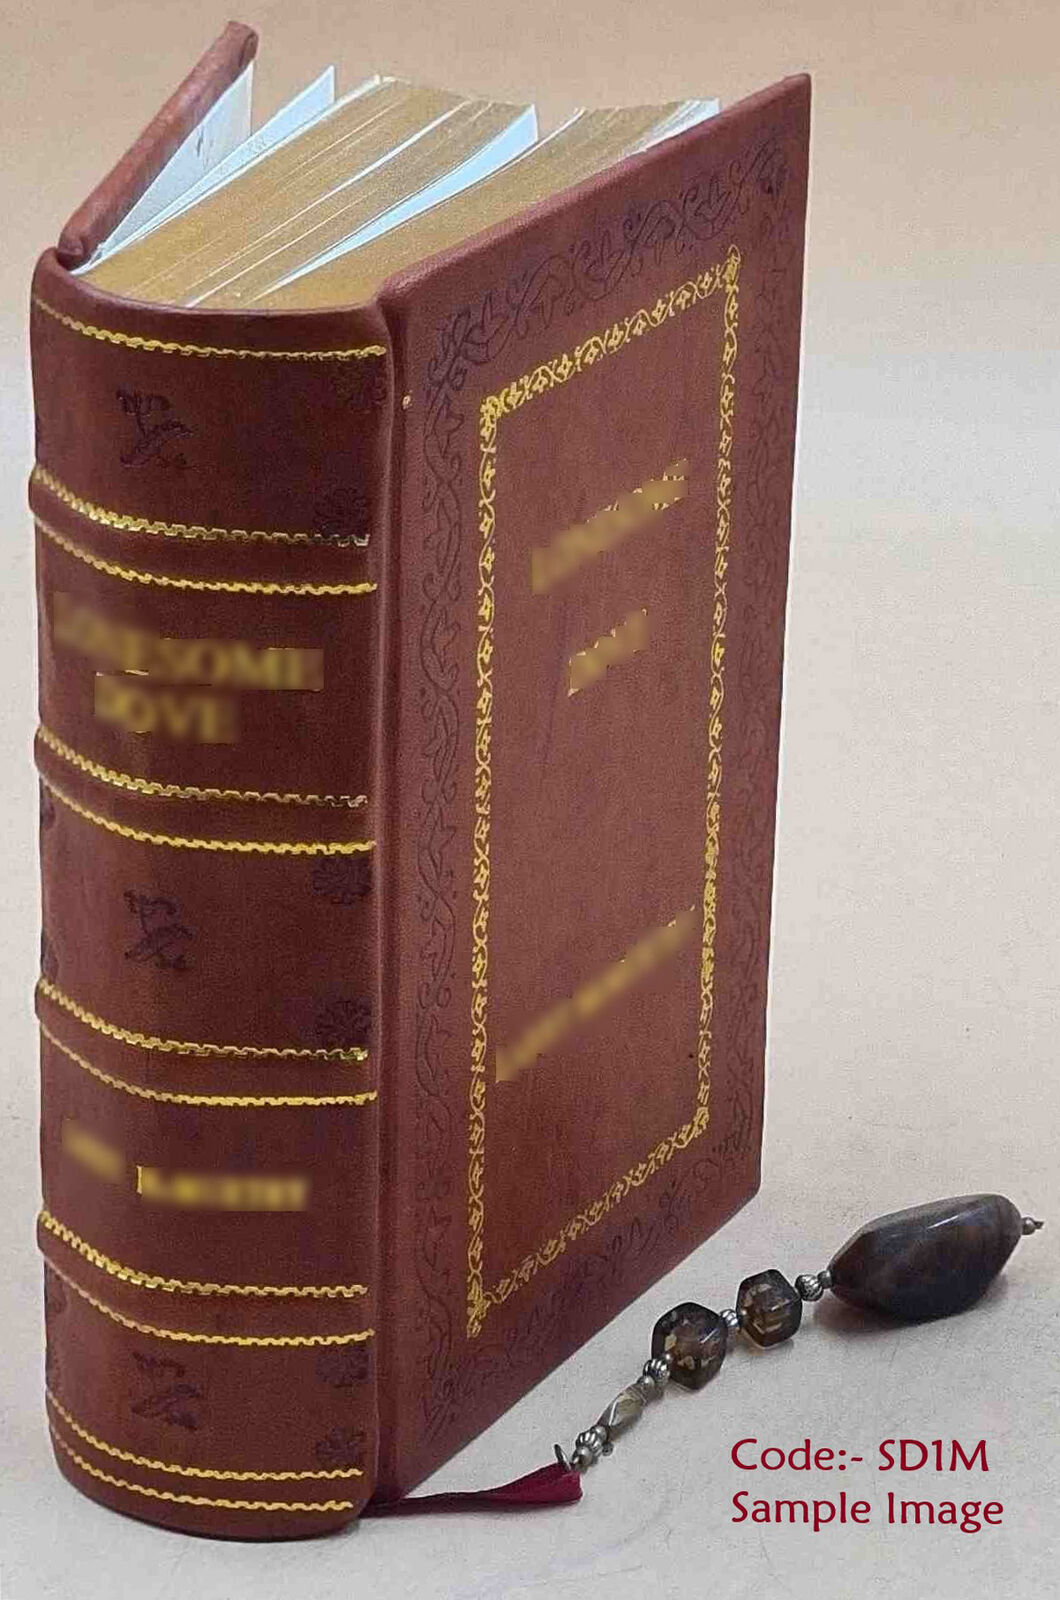 1568 The Bishop's Bible [PREMIUM LEATHER BOUND]